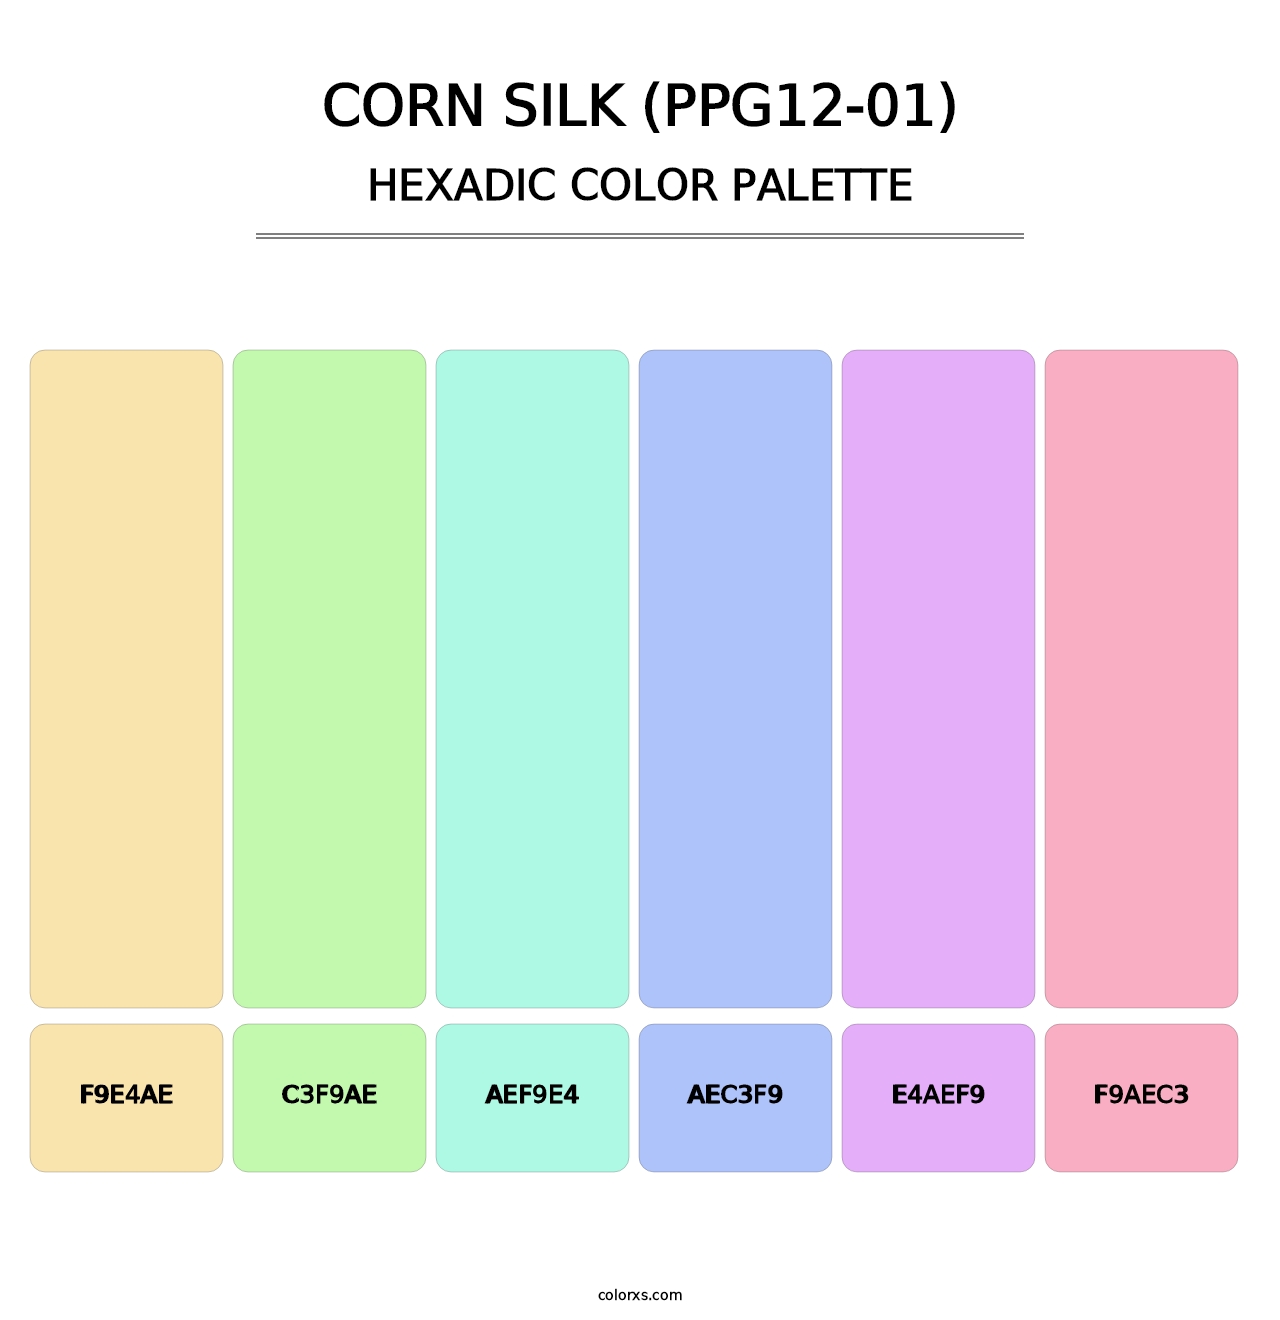 Corn Silk (PPG12-01) - Hexadic Color Palette